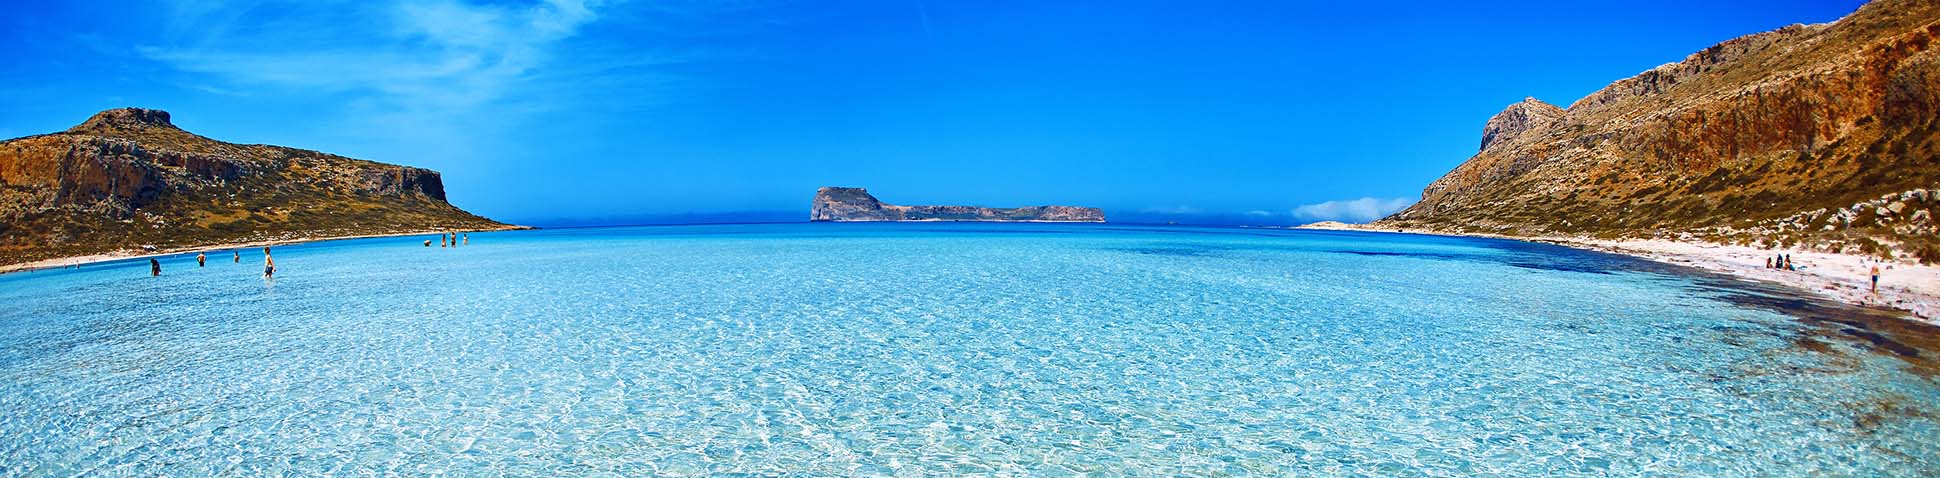 Blick auf Strand in Kreta